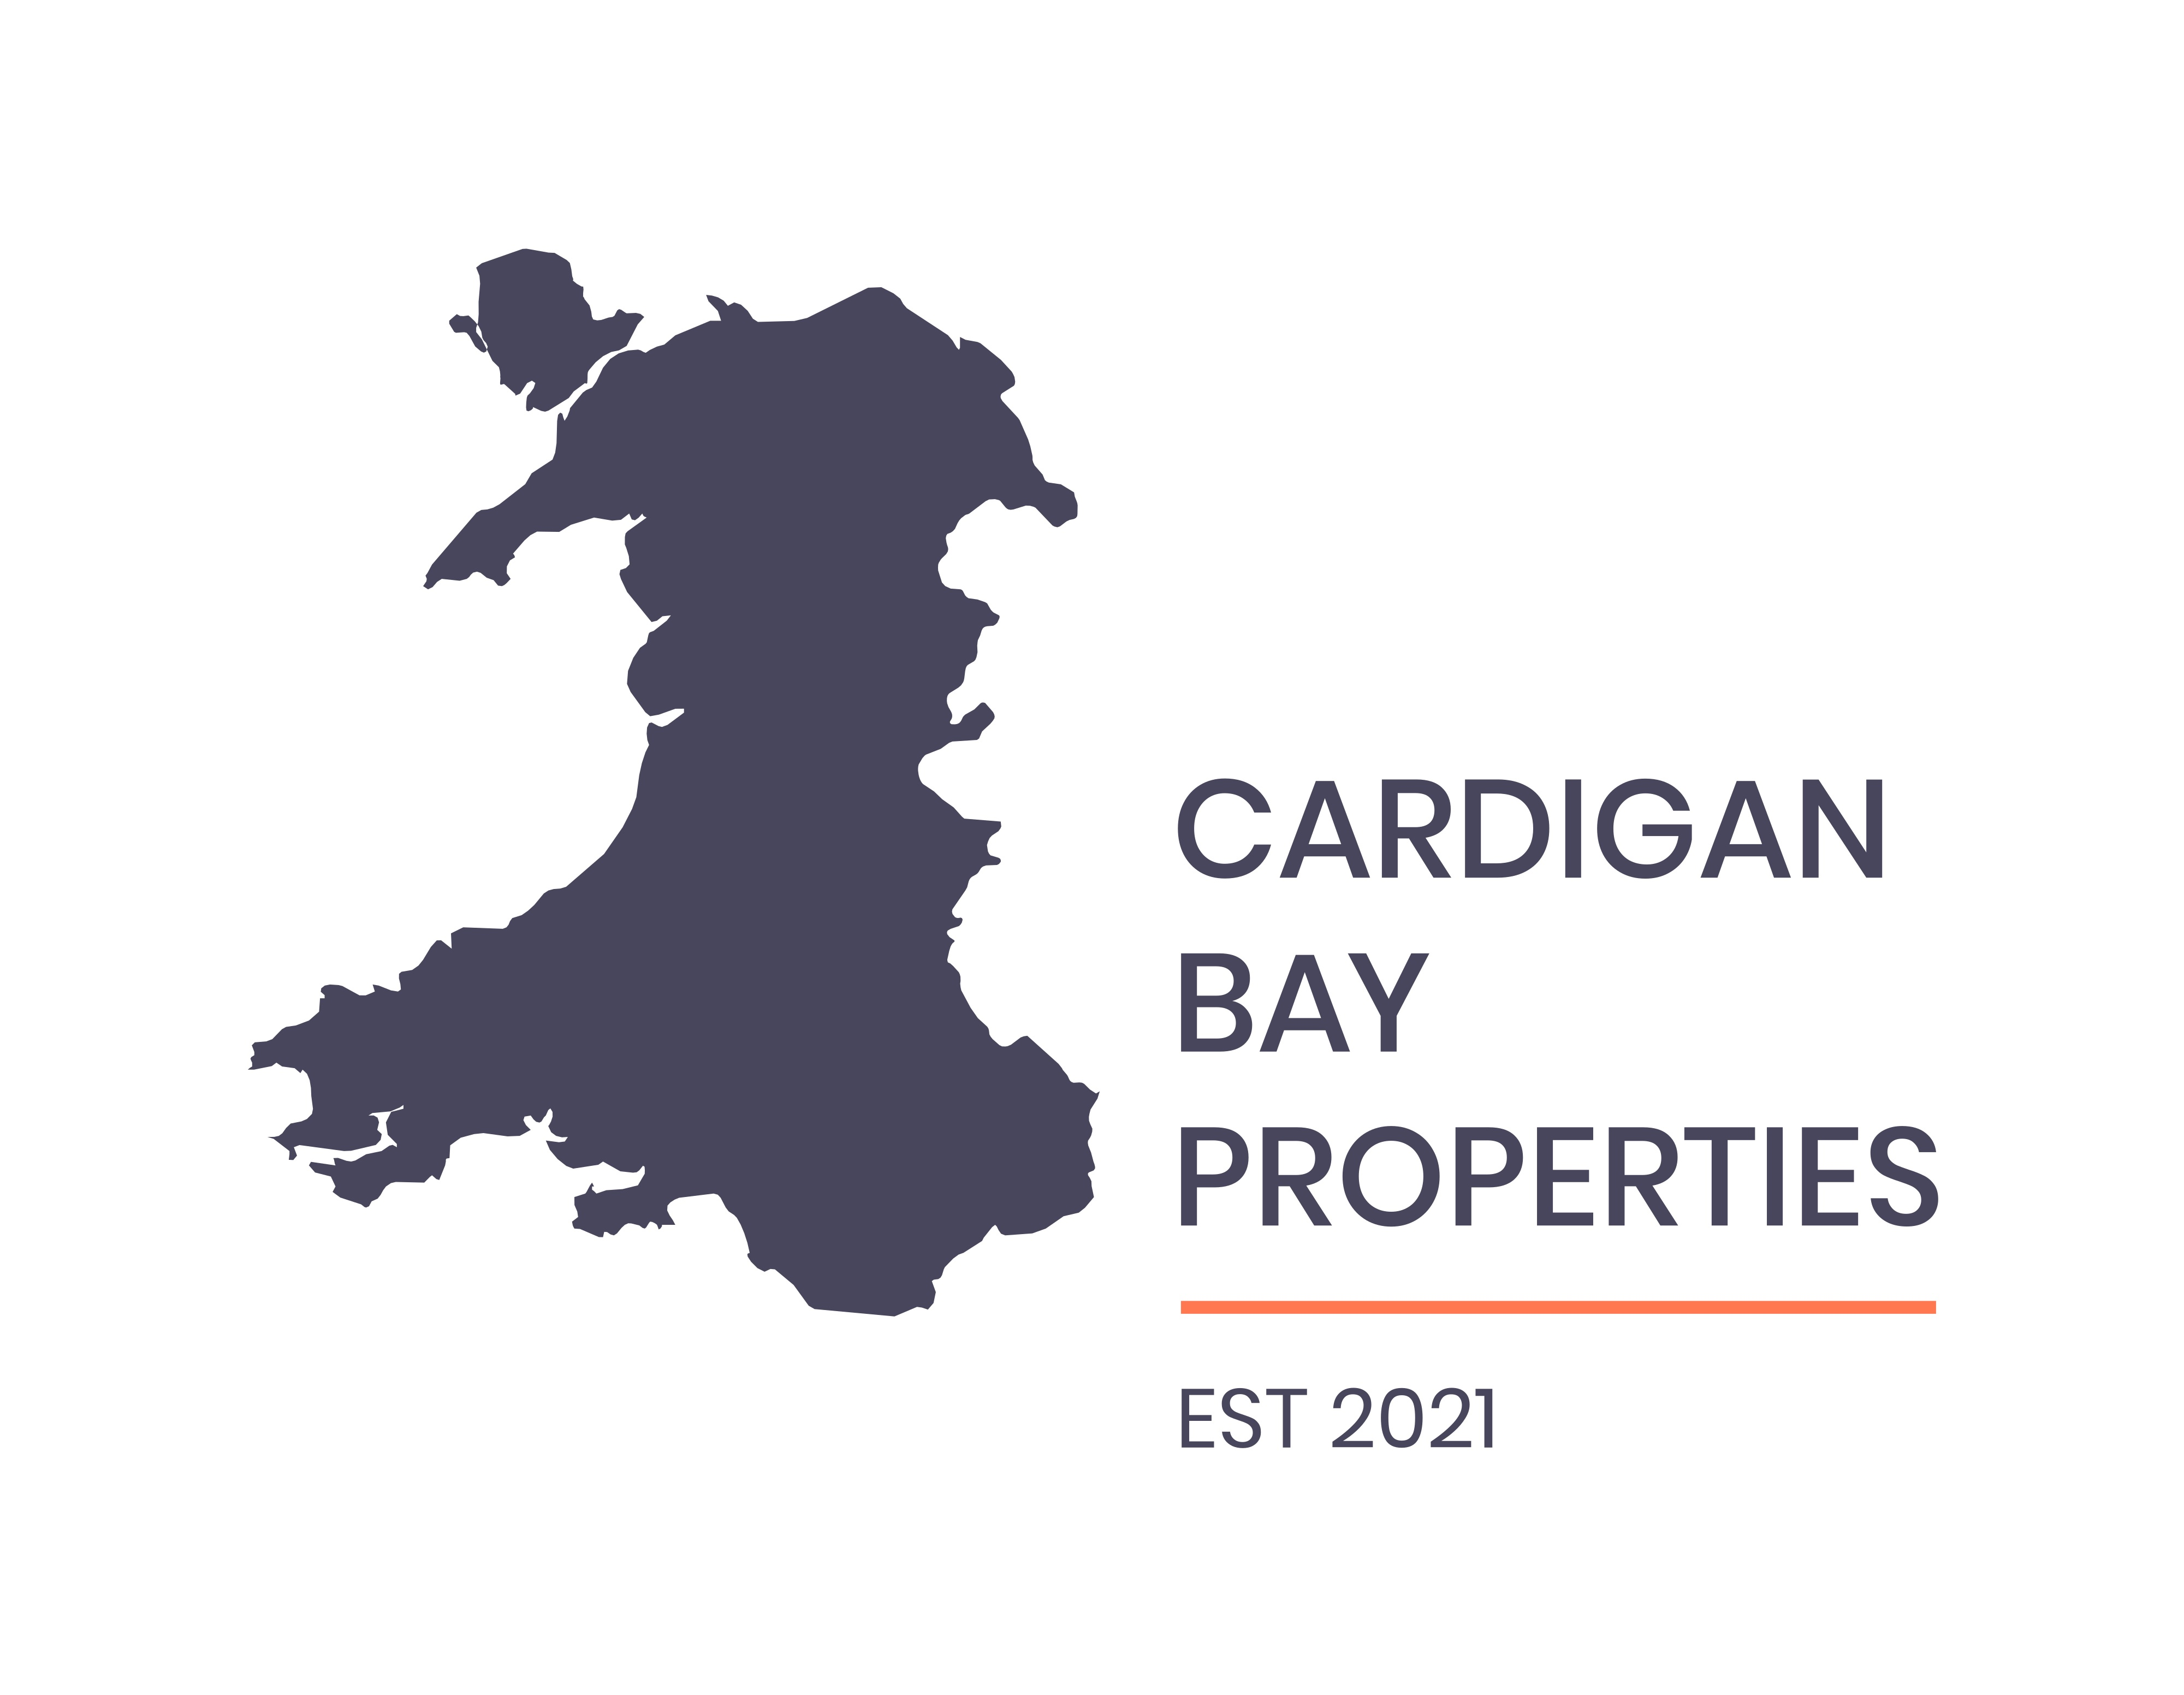 Cardigan Bay Properties -
01239 562500